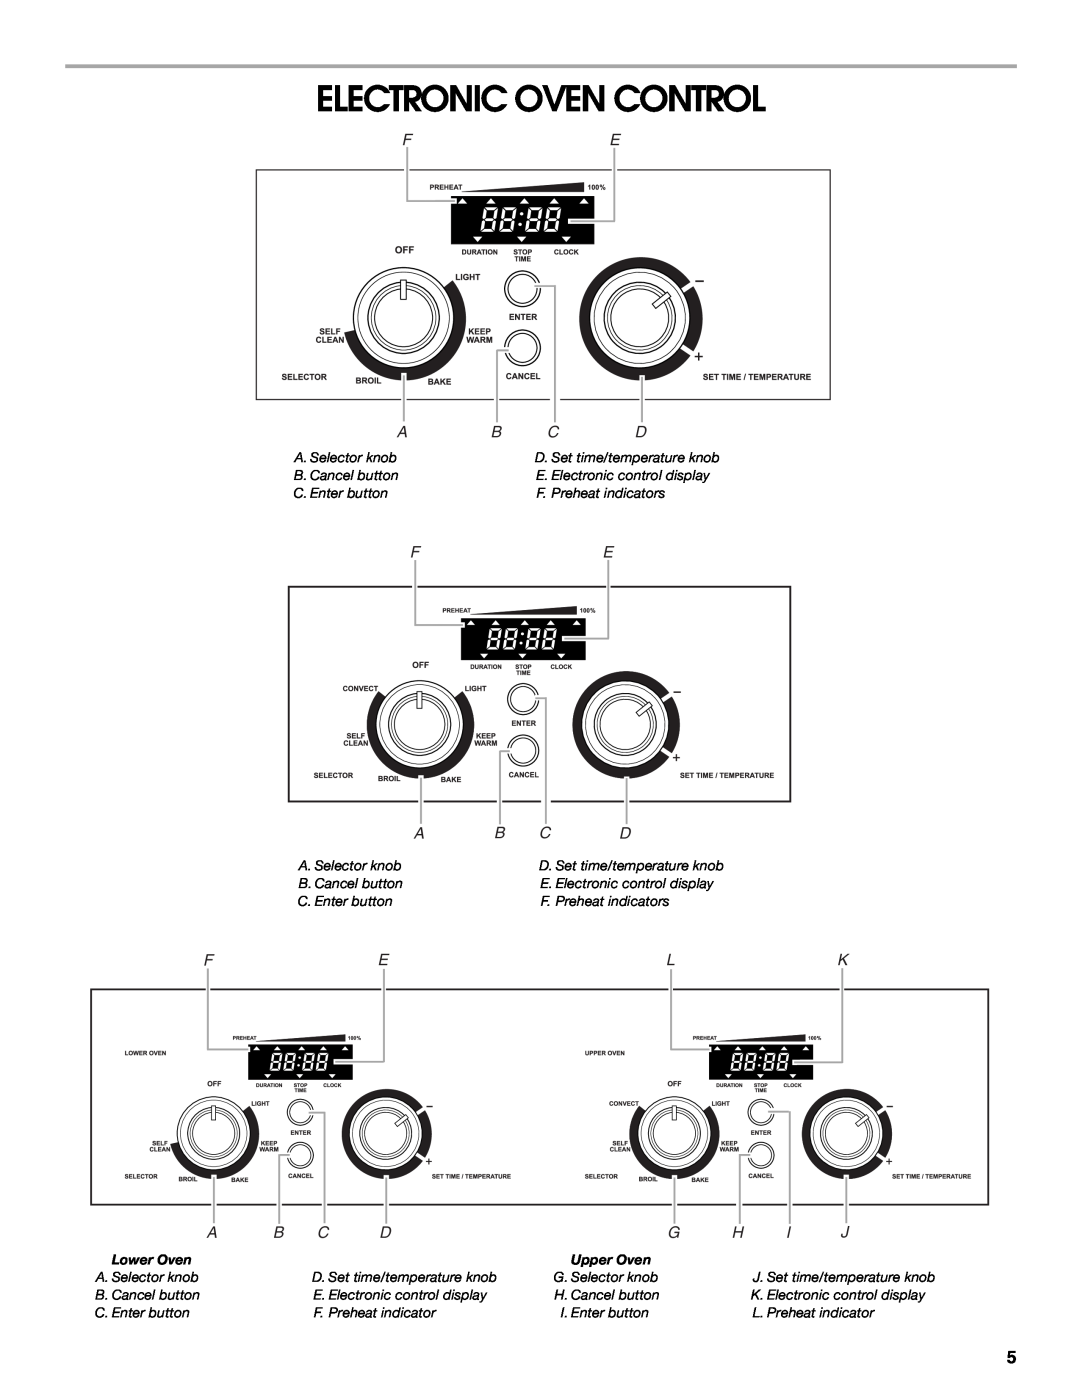 Whirlpool IBS330P, IBD550P manual Electronic Oven Control, Fe Ab Cd, Fe A B C D, Felk, Lower Oven, Upper Oven 